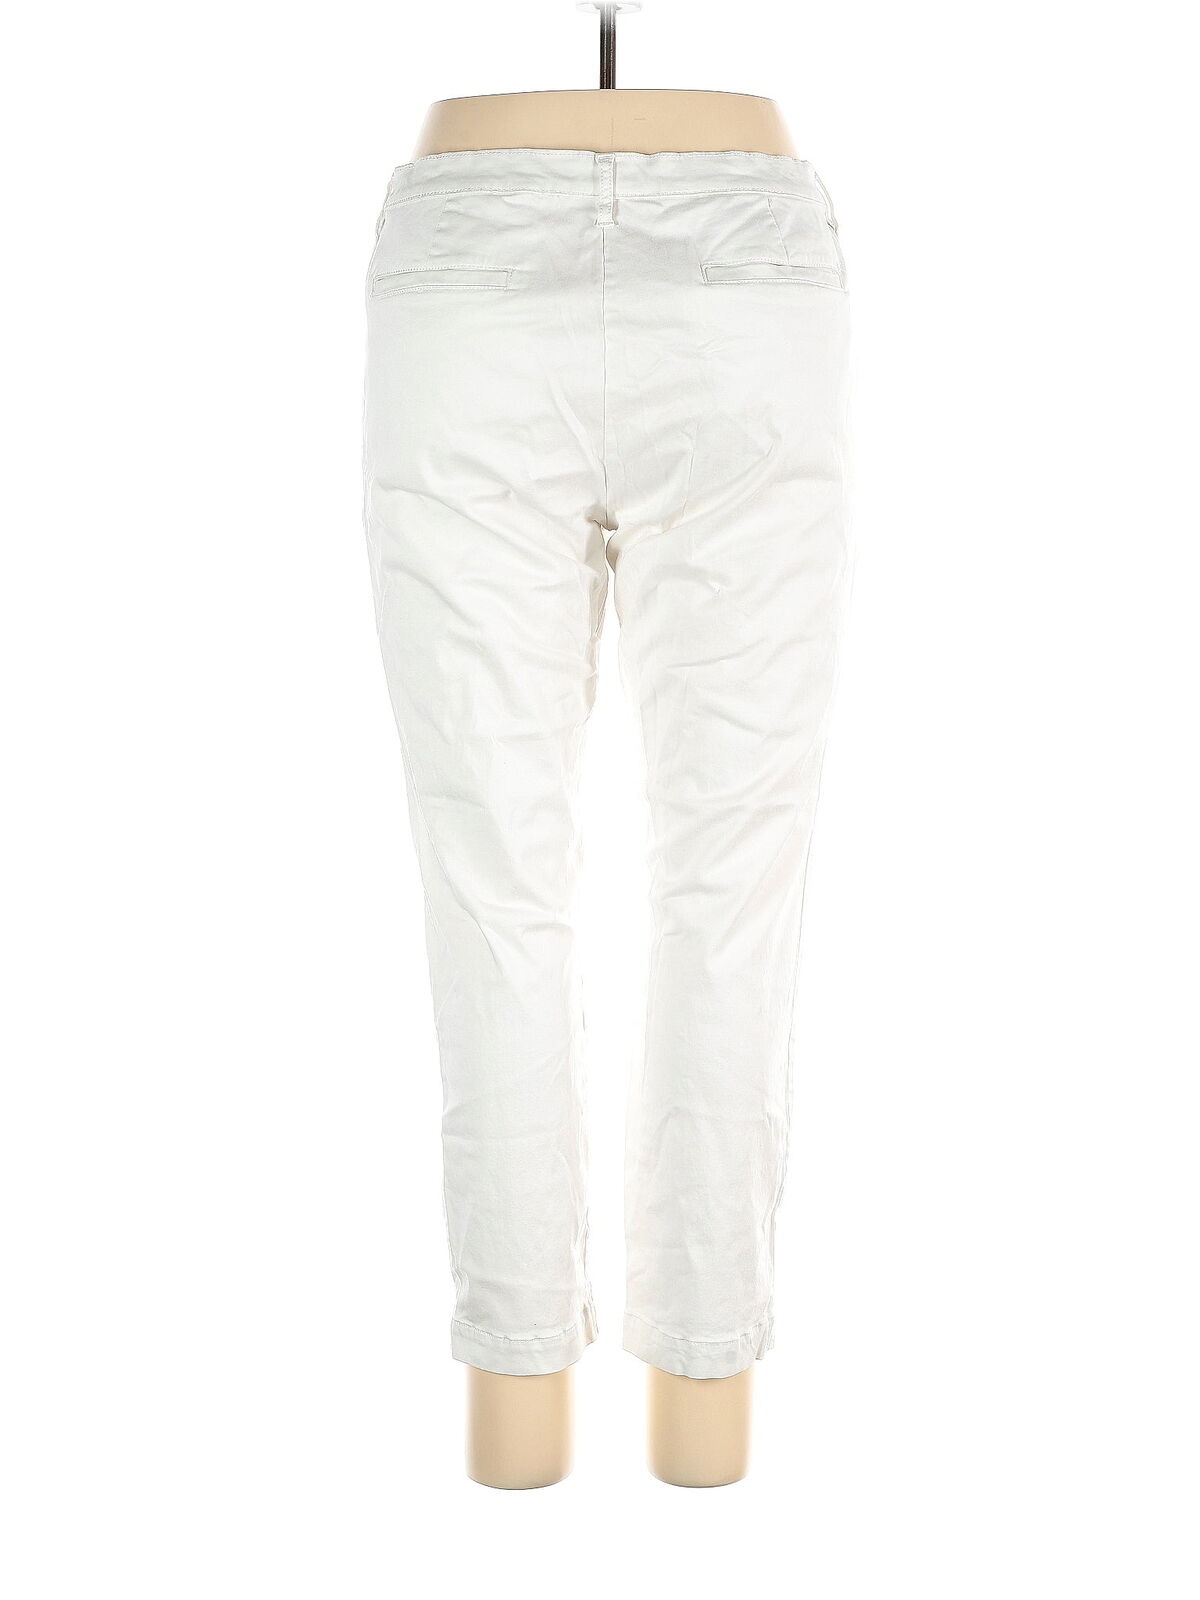 Nautica Jeans Company Women White Jeans 14 - image 2